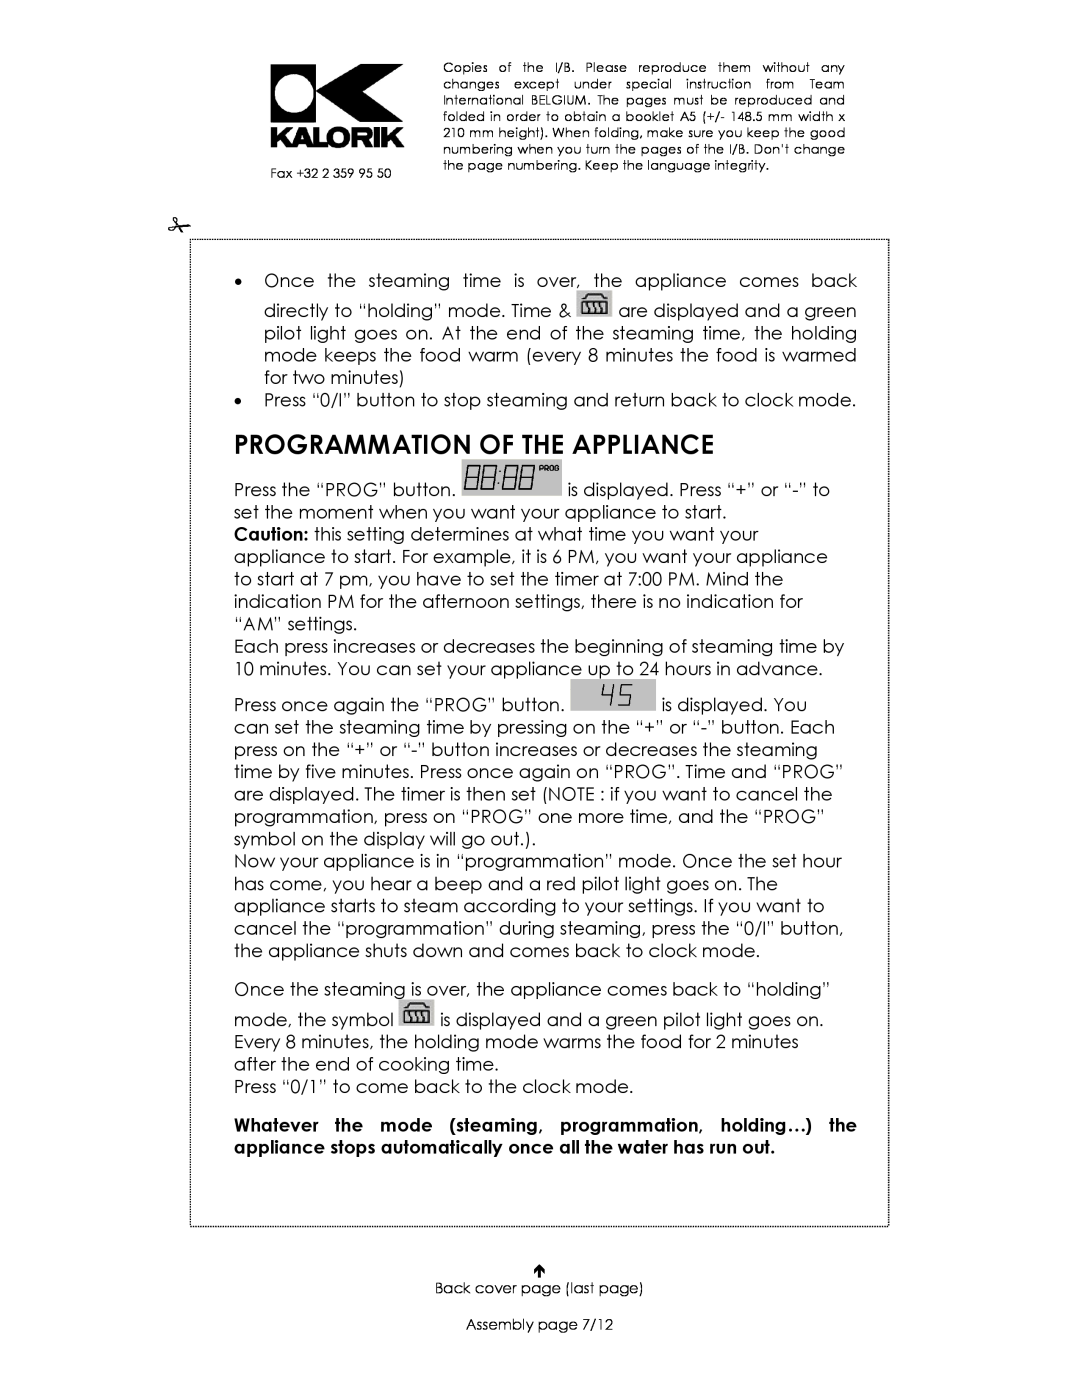 Kalorik USK DG 16271 manual Programmation Of The Appliance 